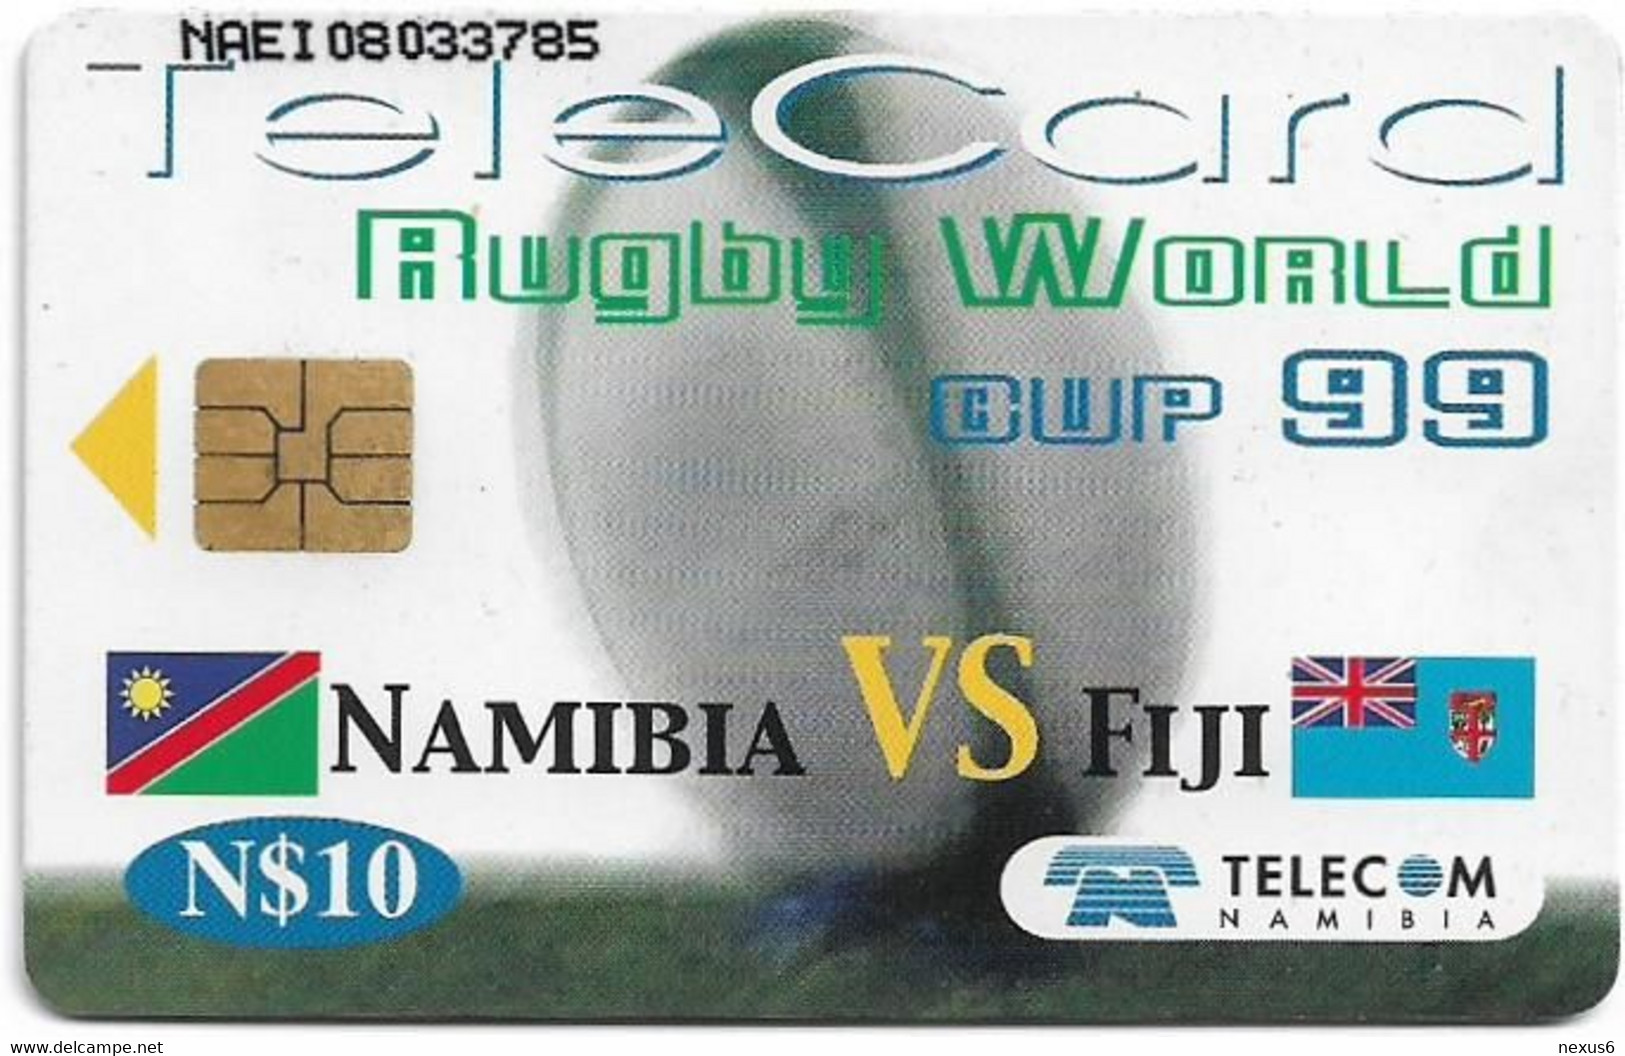 Namibia - Telecom Namibia - Rugby World Cup '99, Namibia VS Fiji - 10$, 1999, Used - Namibia